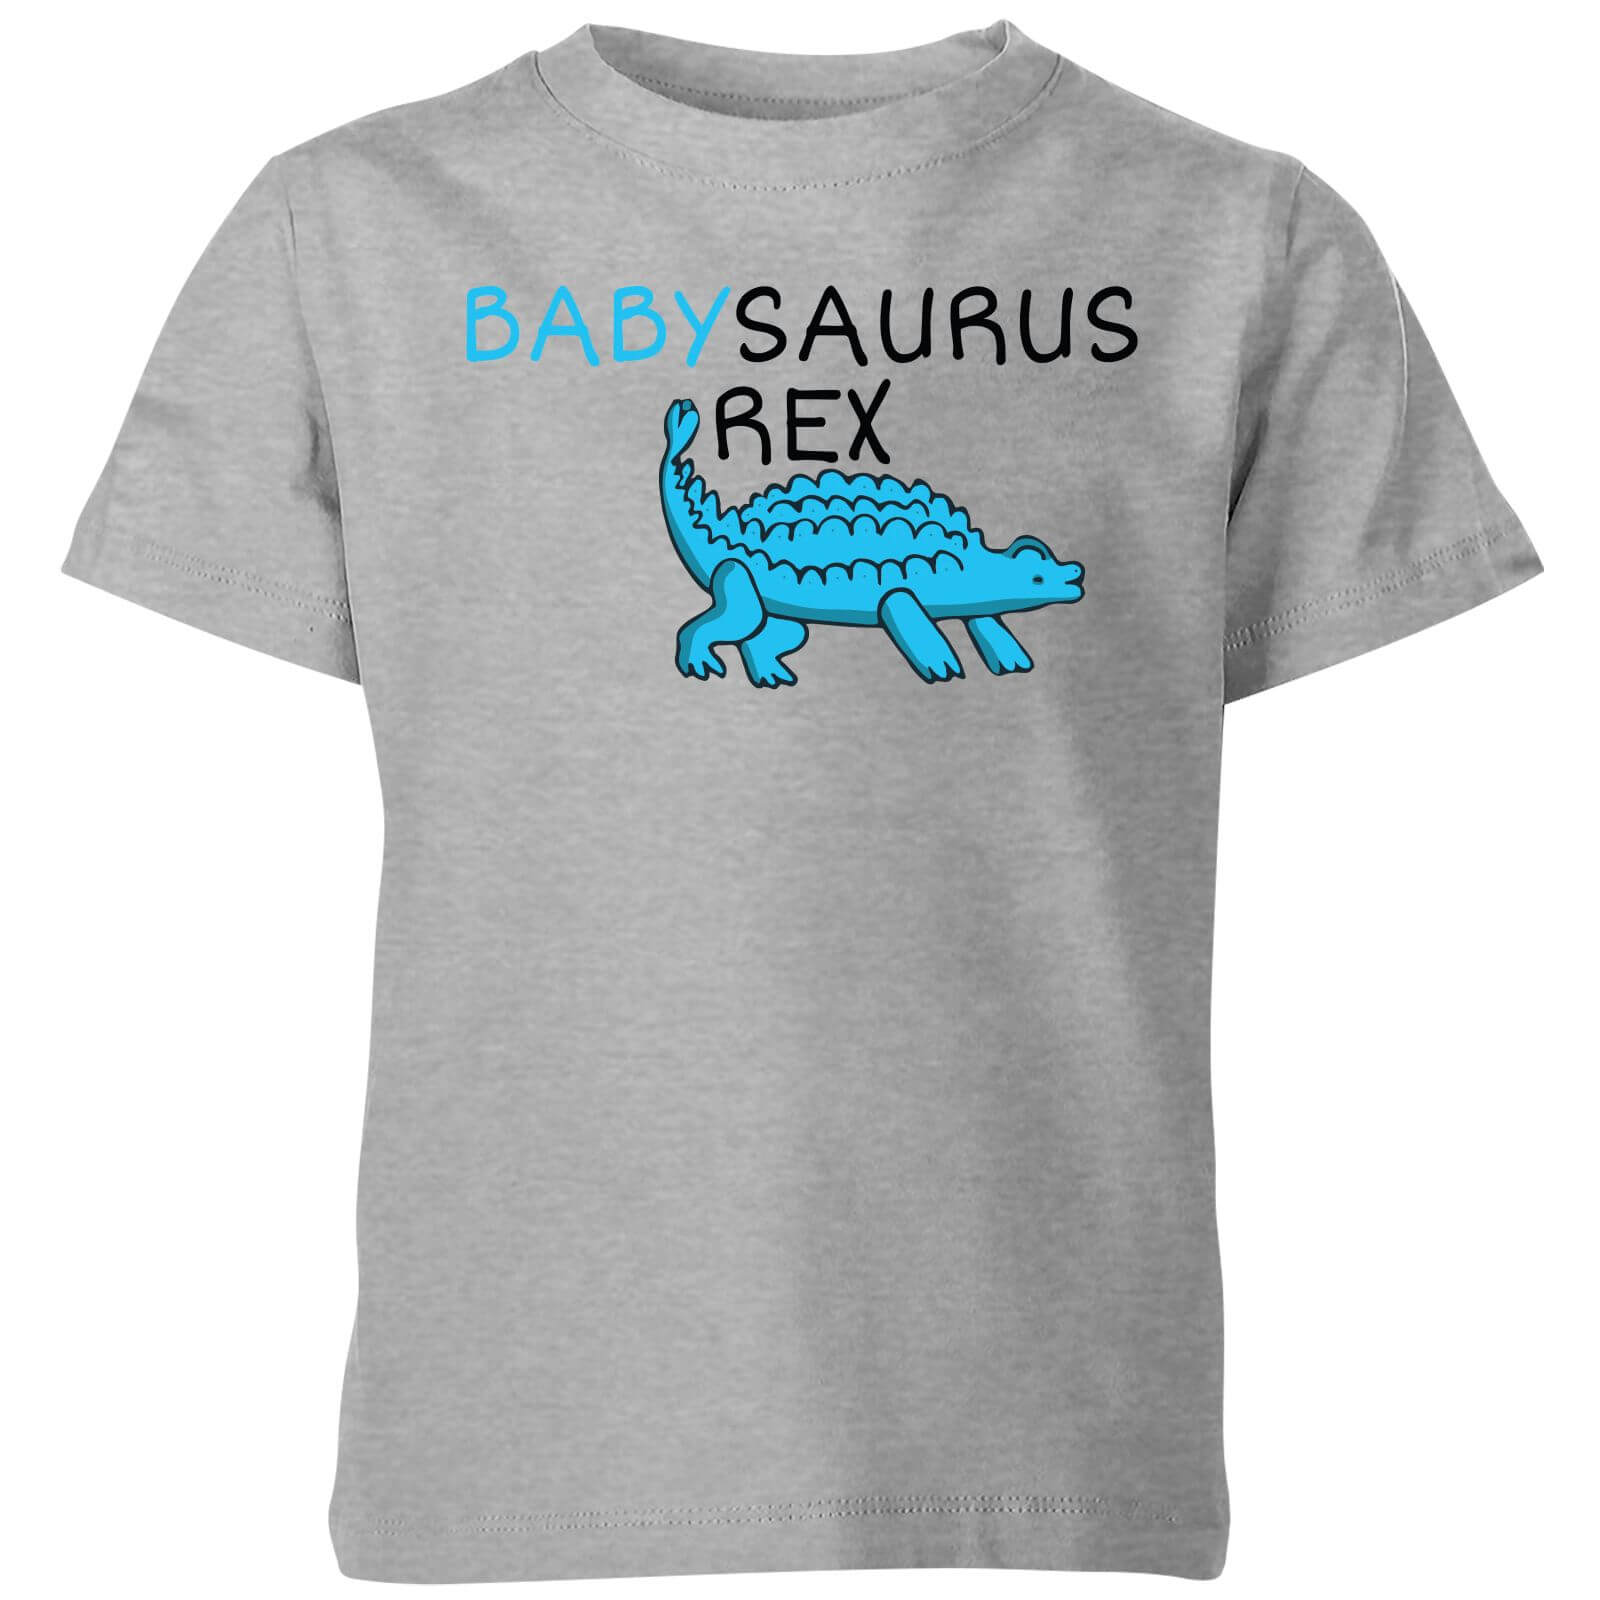 Babysaurus Rex Kids' T-Shirt - Grey - 3-4 Years - Grey